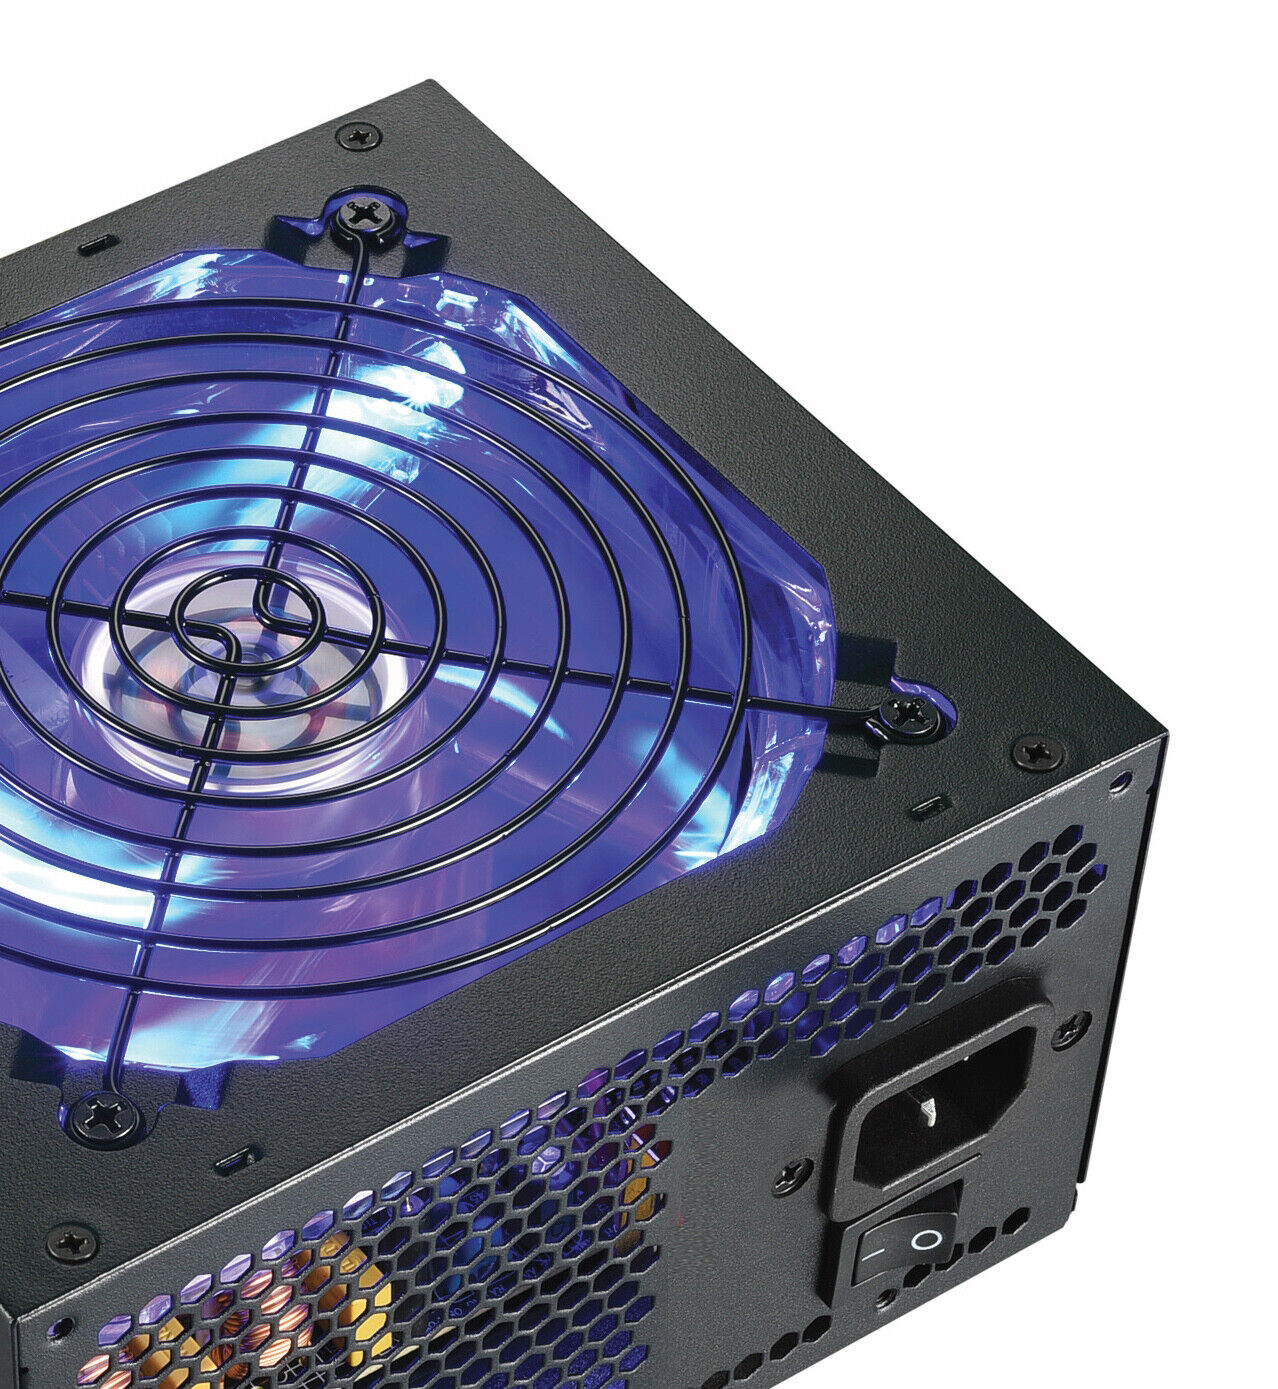 New SHARK 1000W 82plus Quiet Blue LED Fan 2x PCIE Gaming PC ATX12V Power Supply